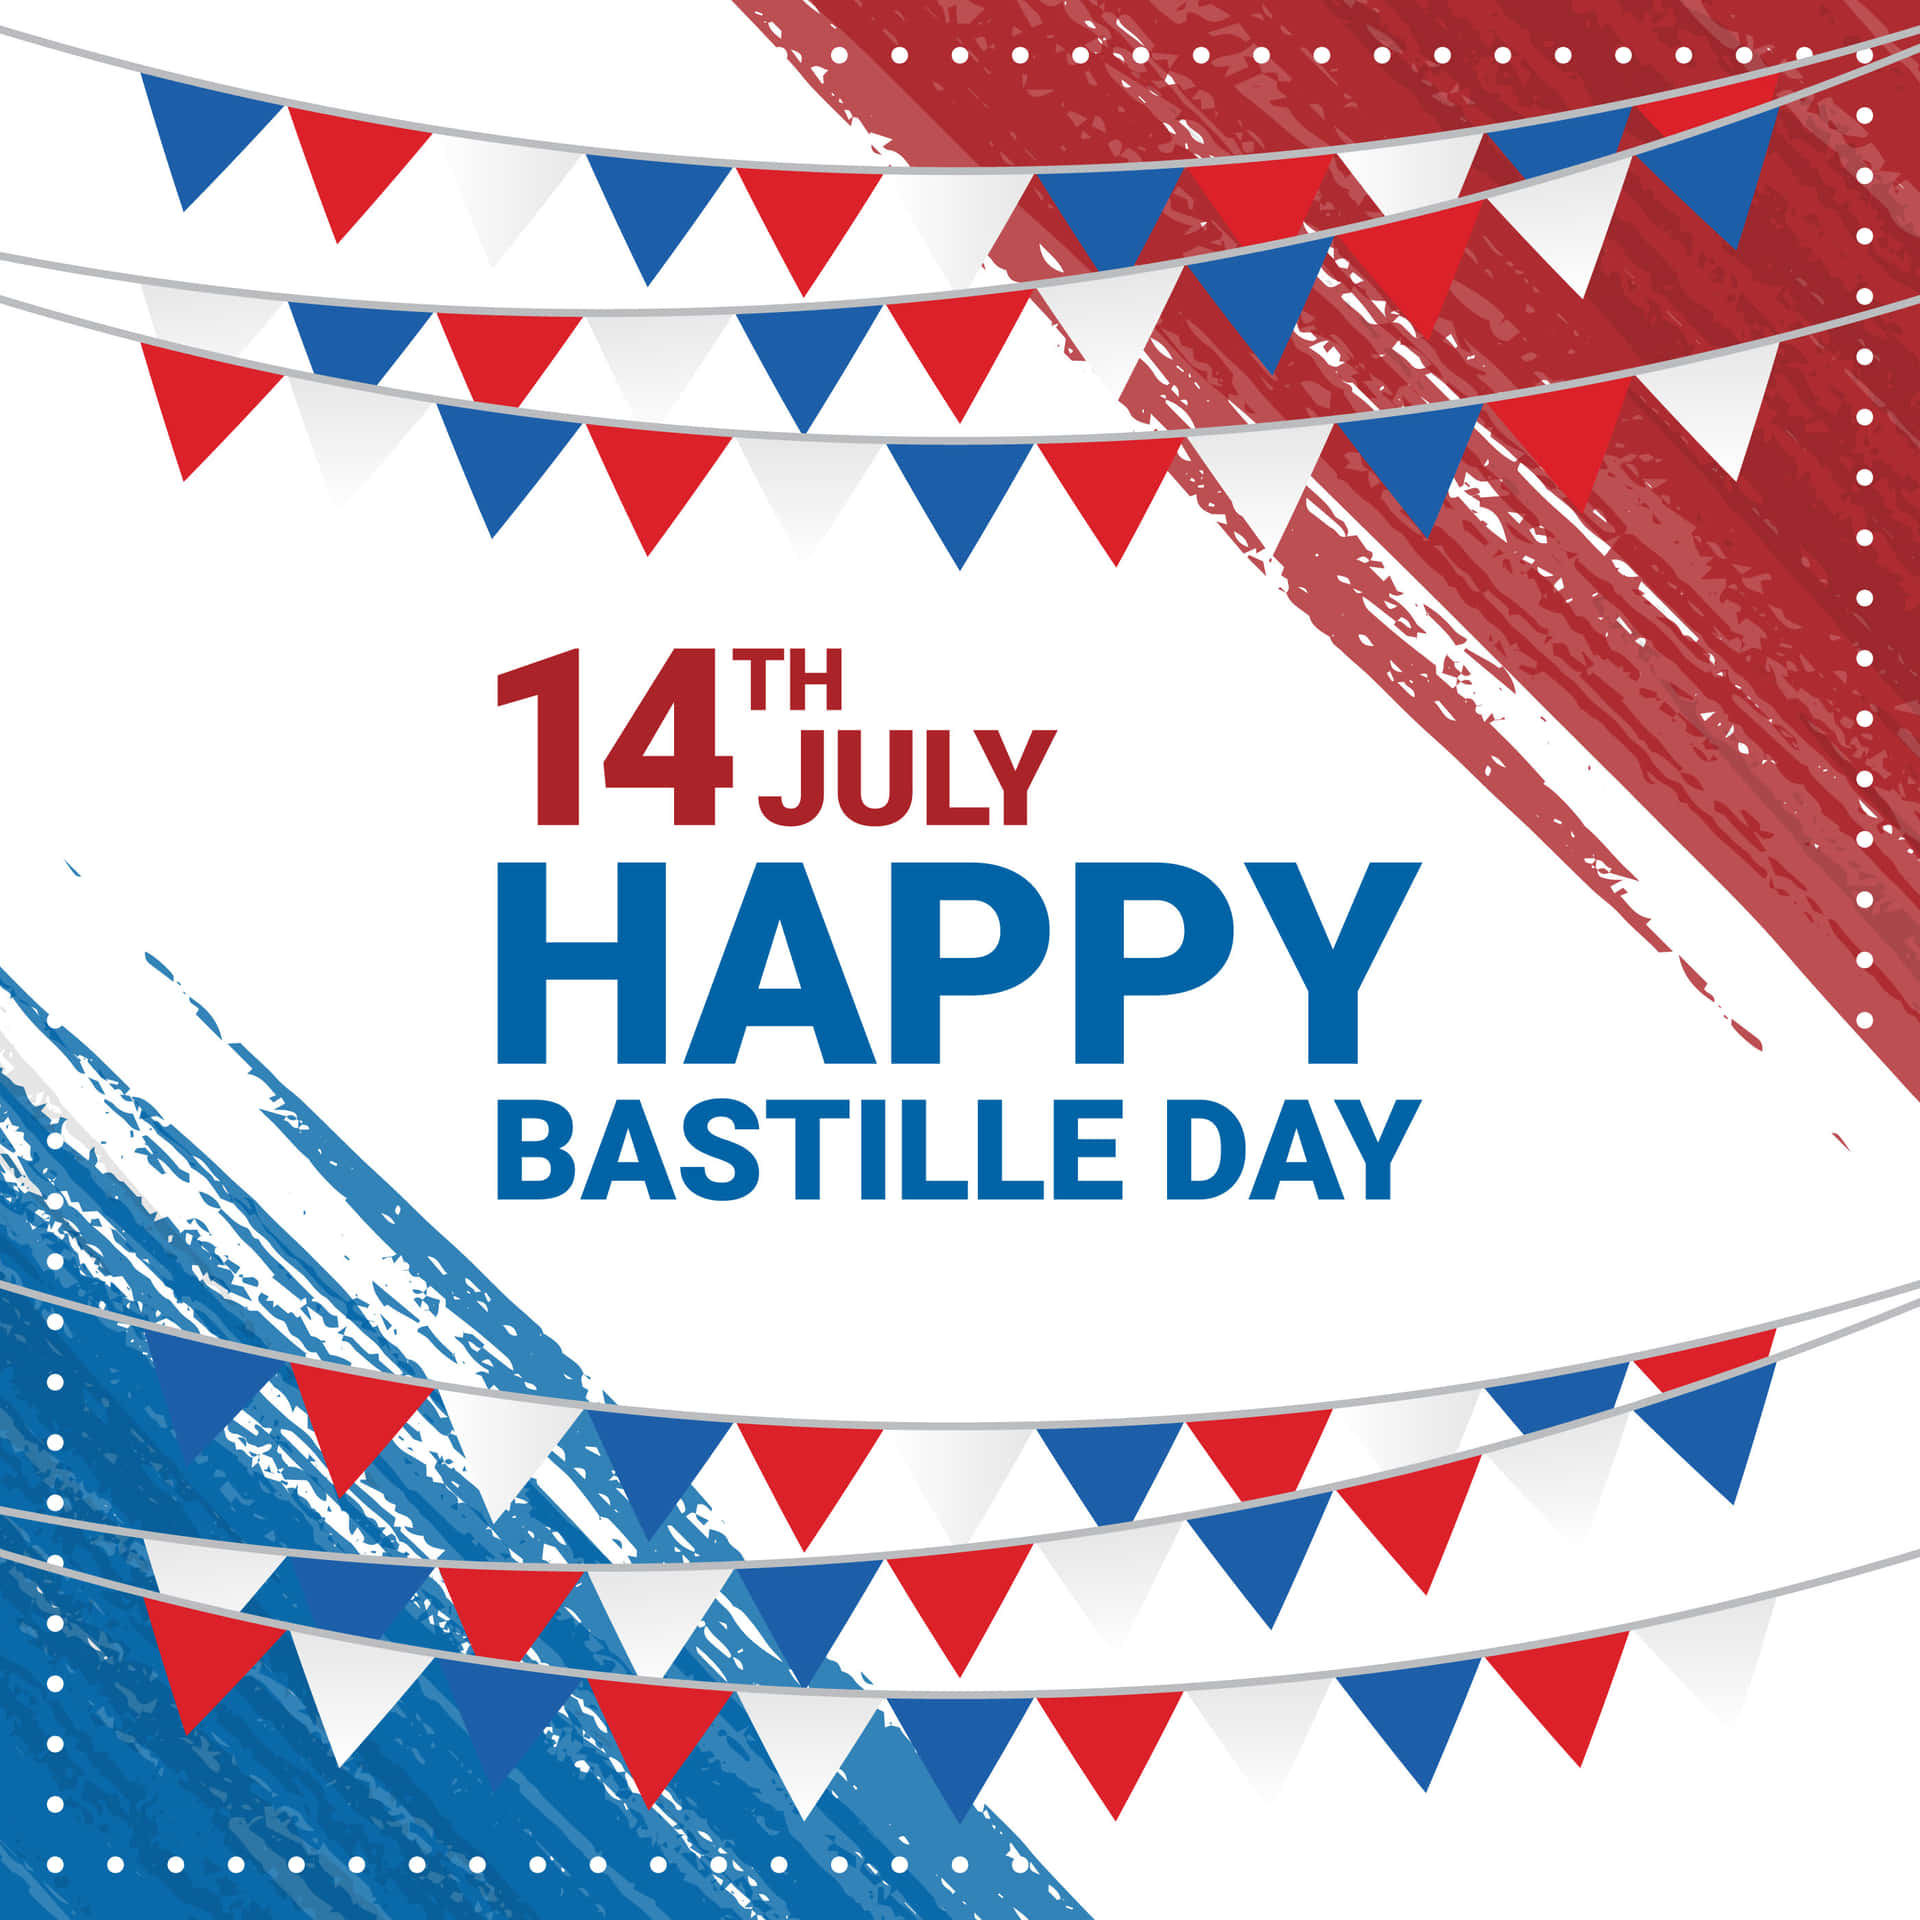 Exhilarating Celebration Of Liberty- Bastille Day In France. Background